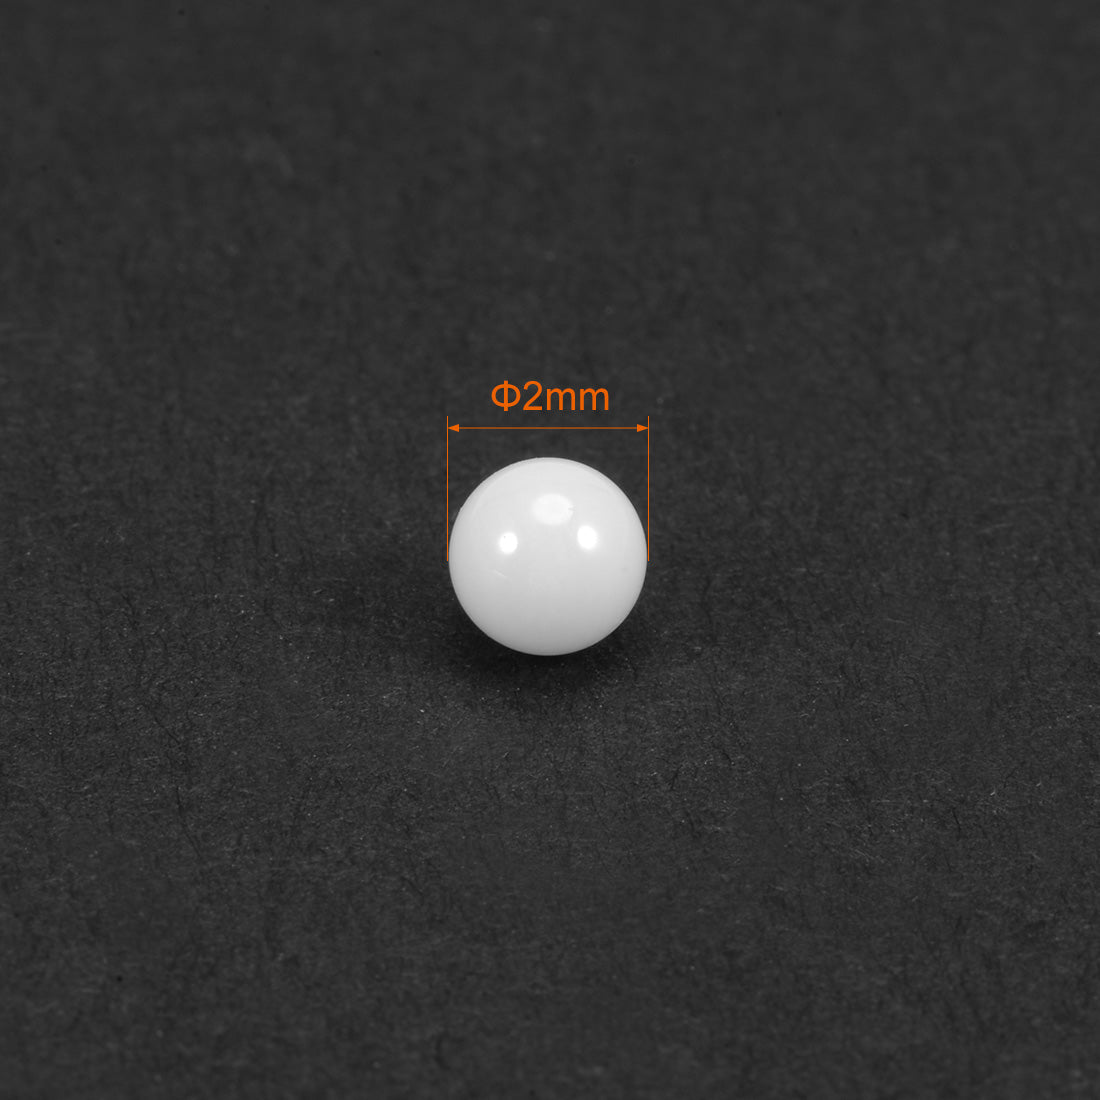 uxcell Uxcell 2mm Ceramic Bearing Balls, ZRO2 Zirconium Oxide Ball G5 Precision 3pcs